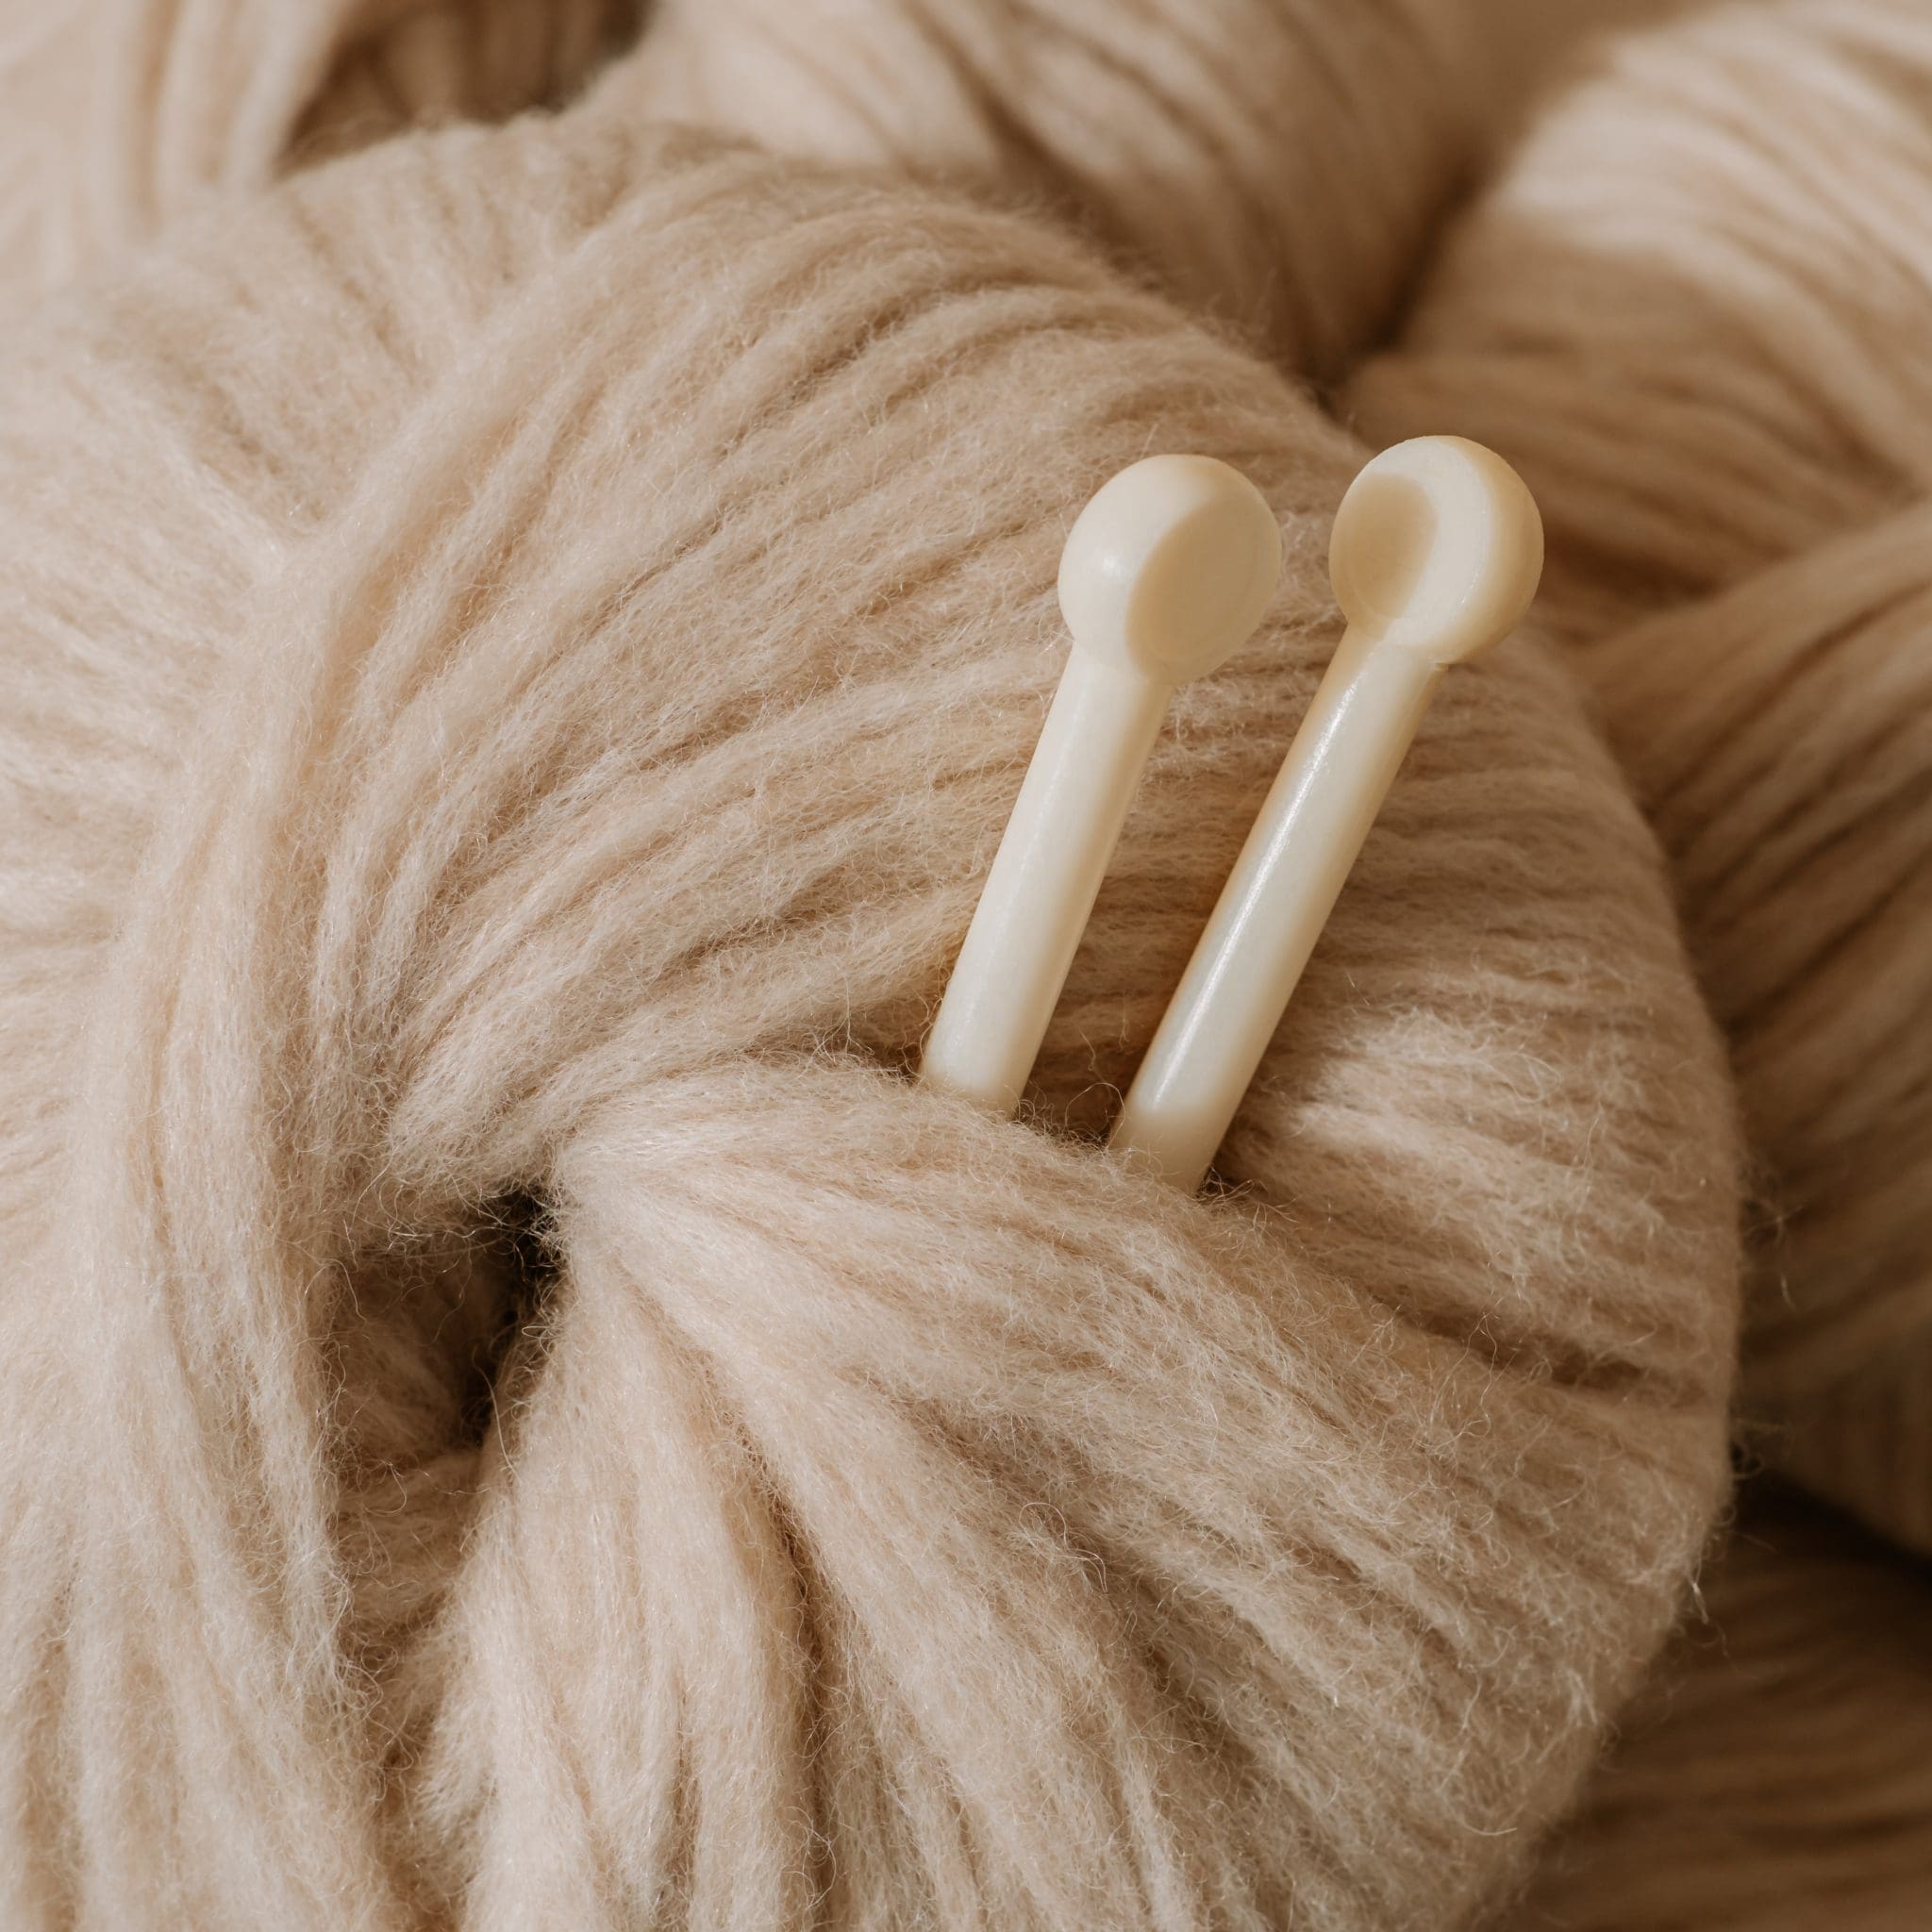 aesthetic beige yarn skein, close up